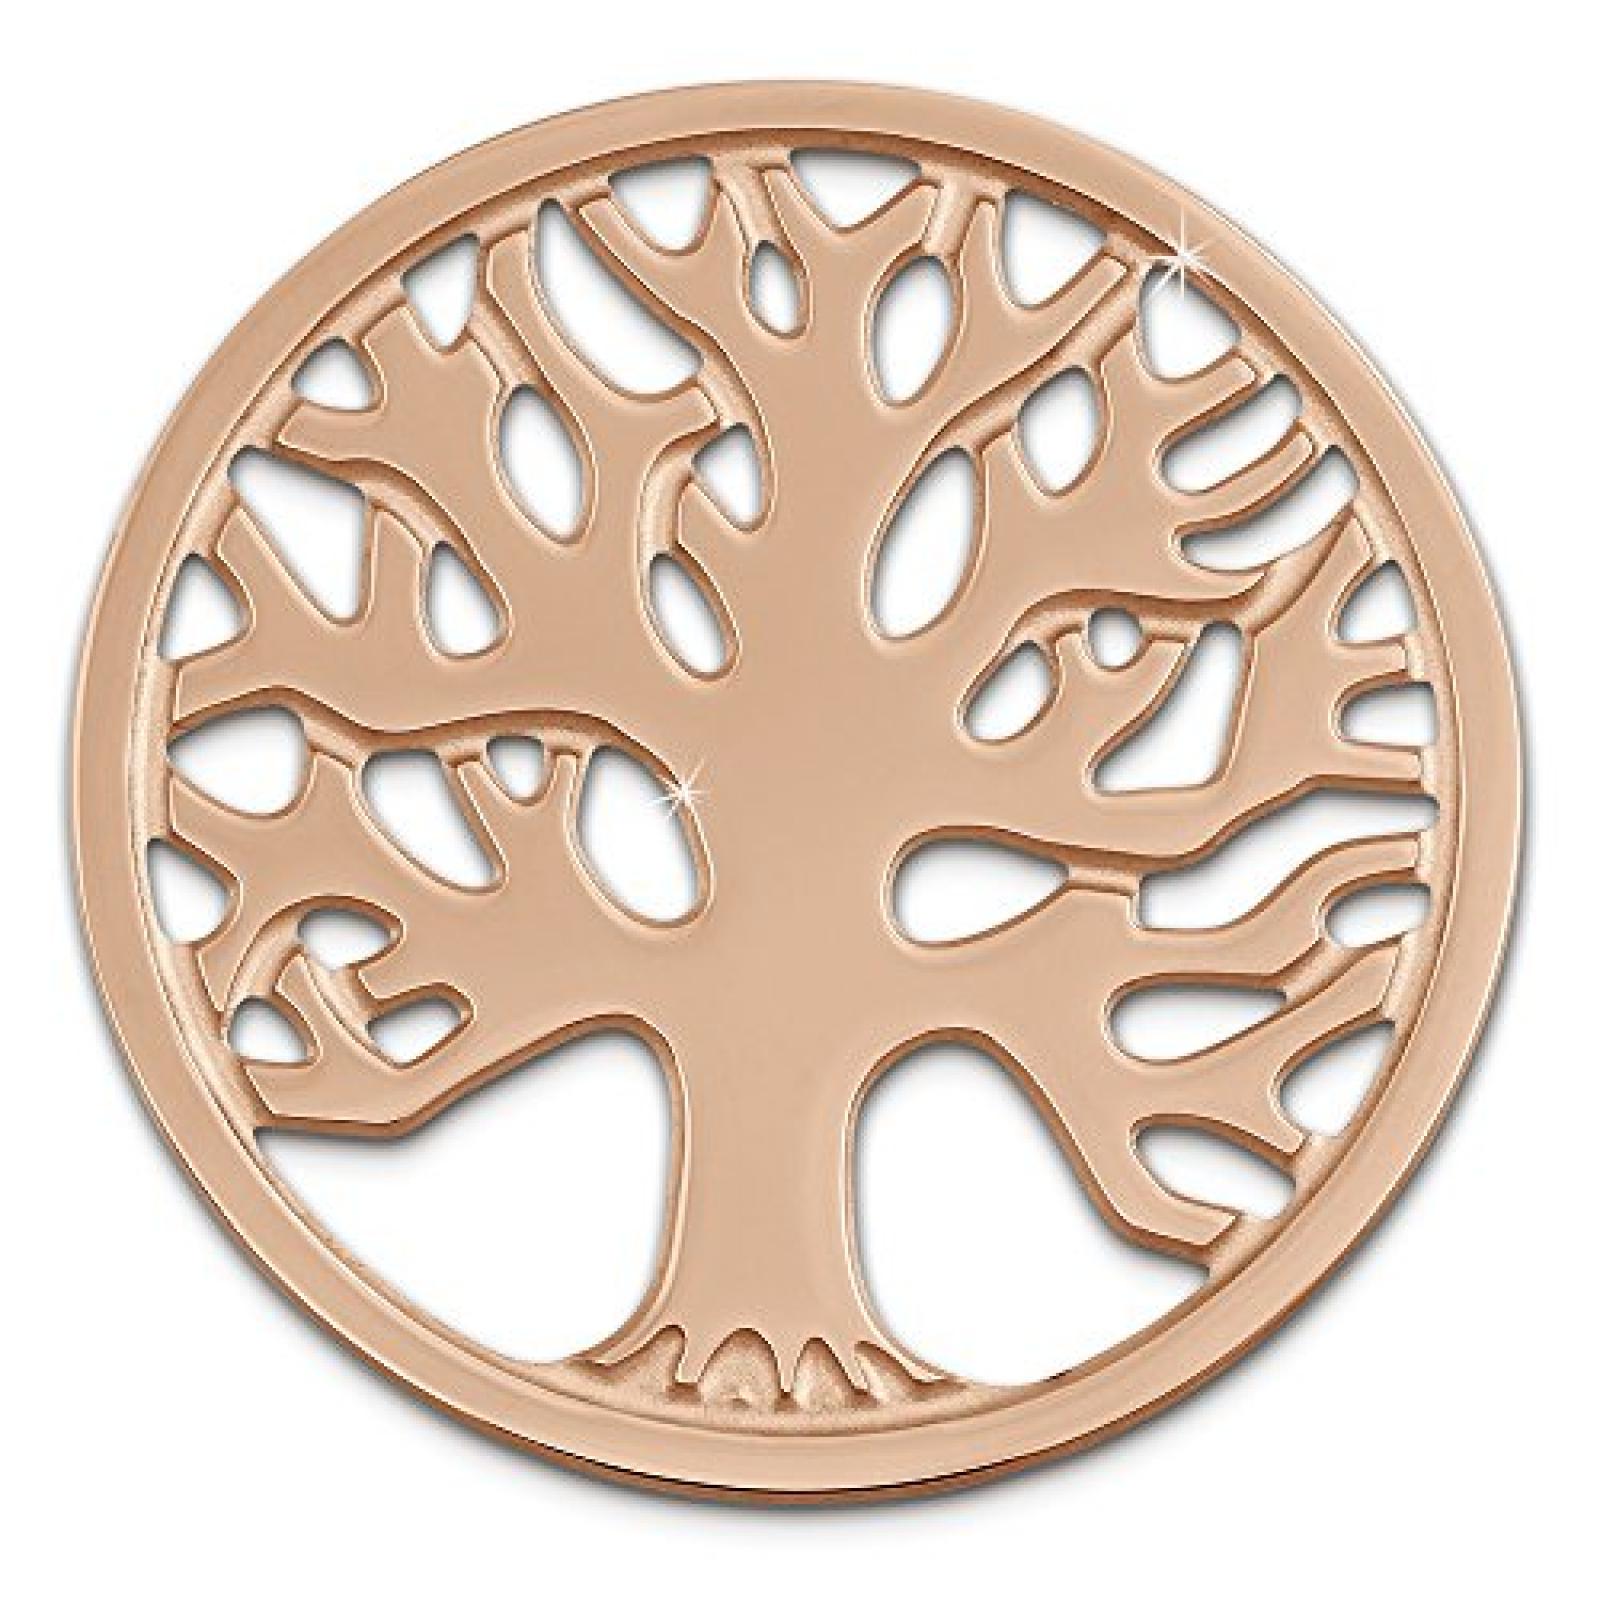 Amello Coin Edelstahl-Schmuck Coin rosevergoldet Lebensbaum - Coin für Amello Coinsfassung für Damen - Edelstahlschmuck Stainless Steel ESC502E 